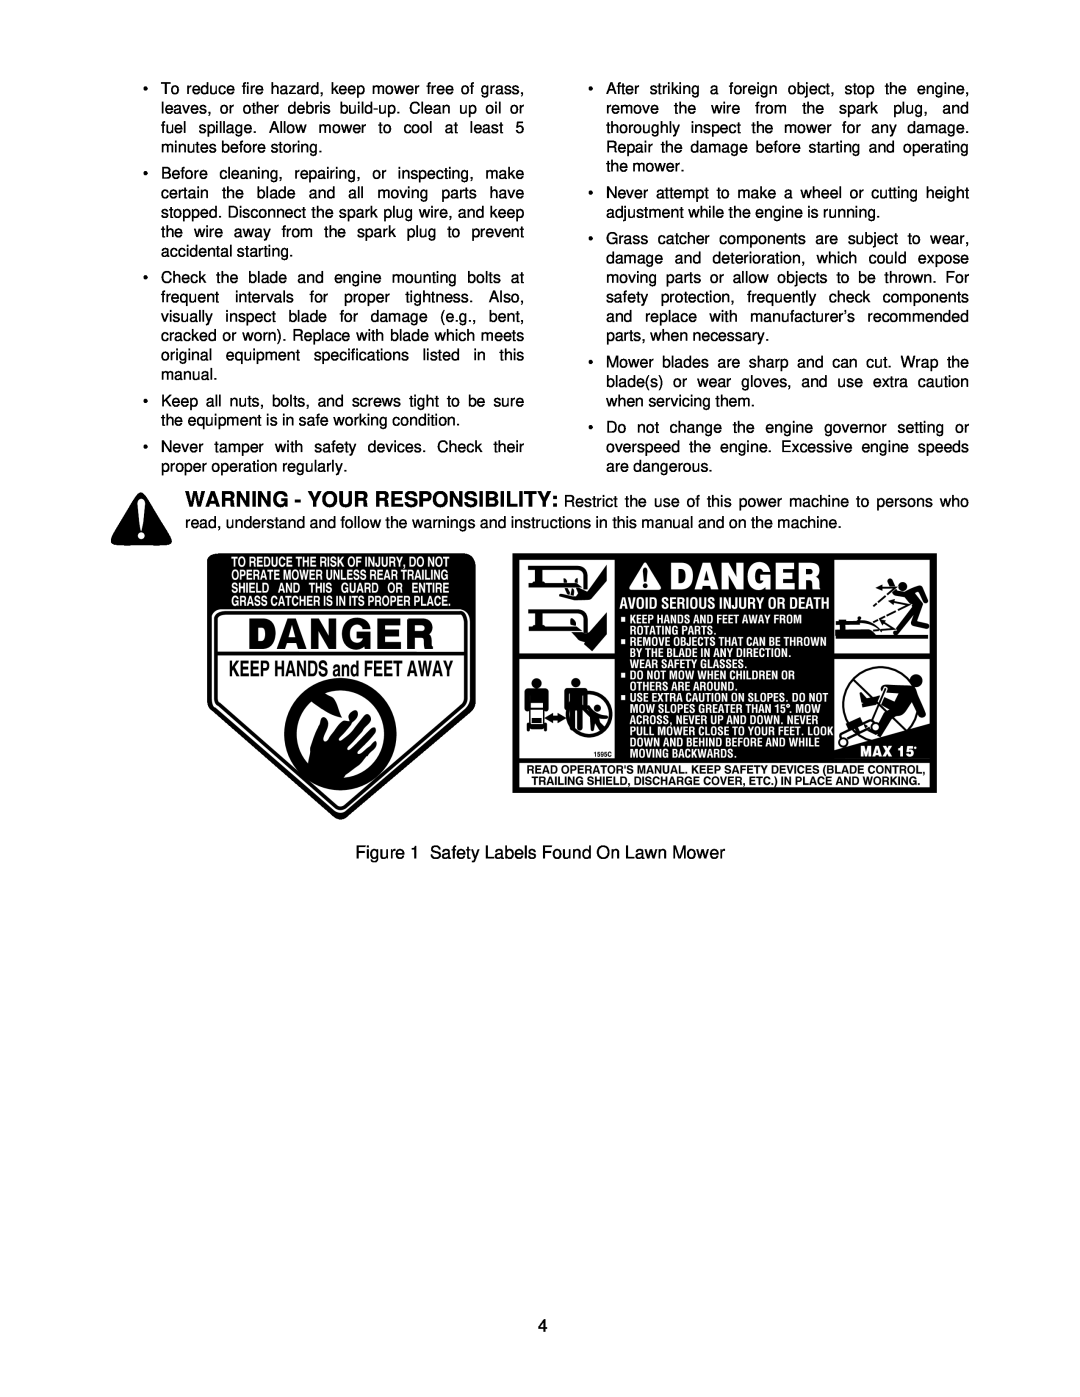 MTD 050 thru 062 manual Safety Labels Found On Lawn Mower 